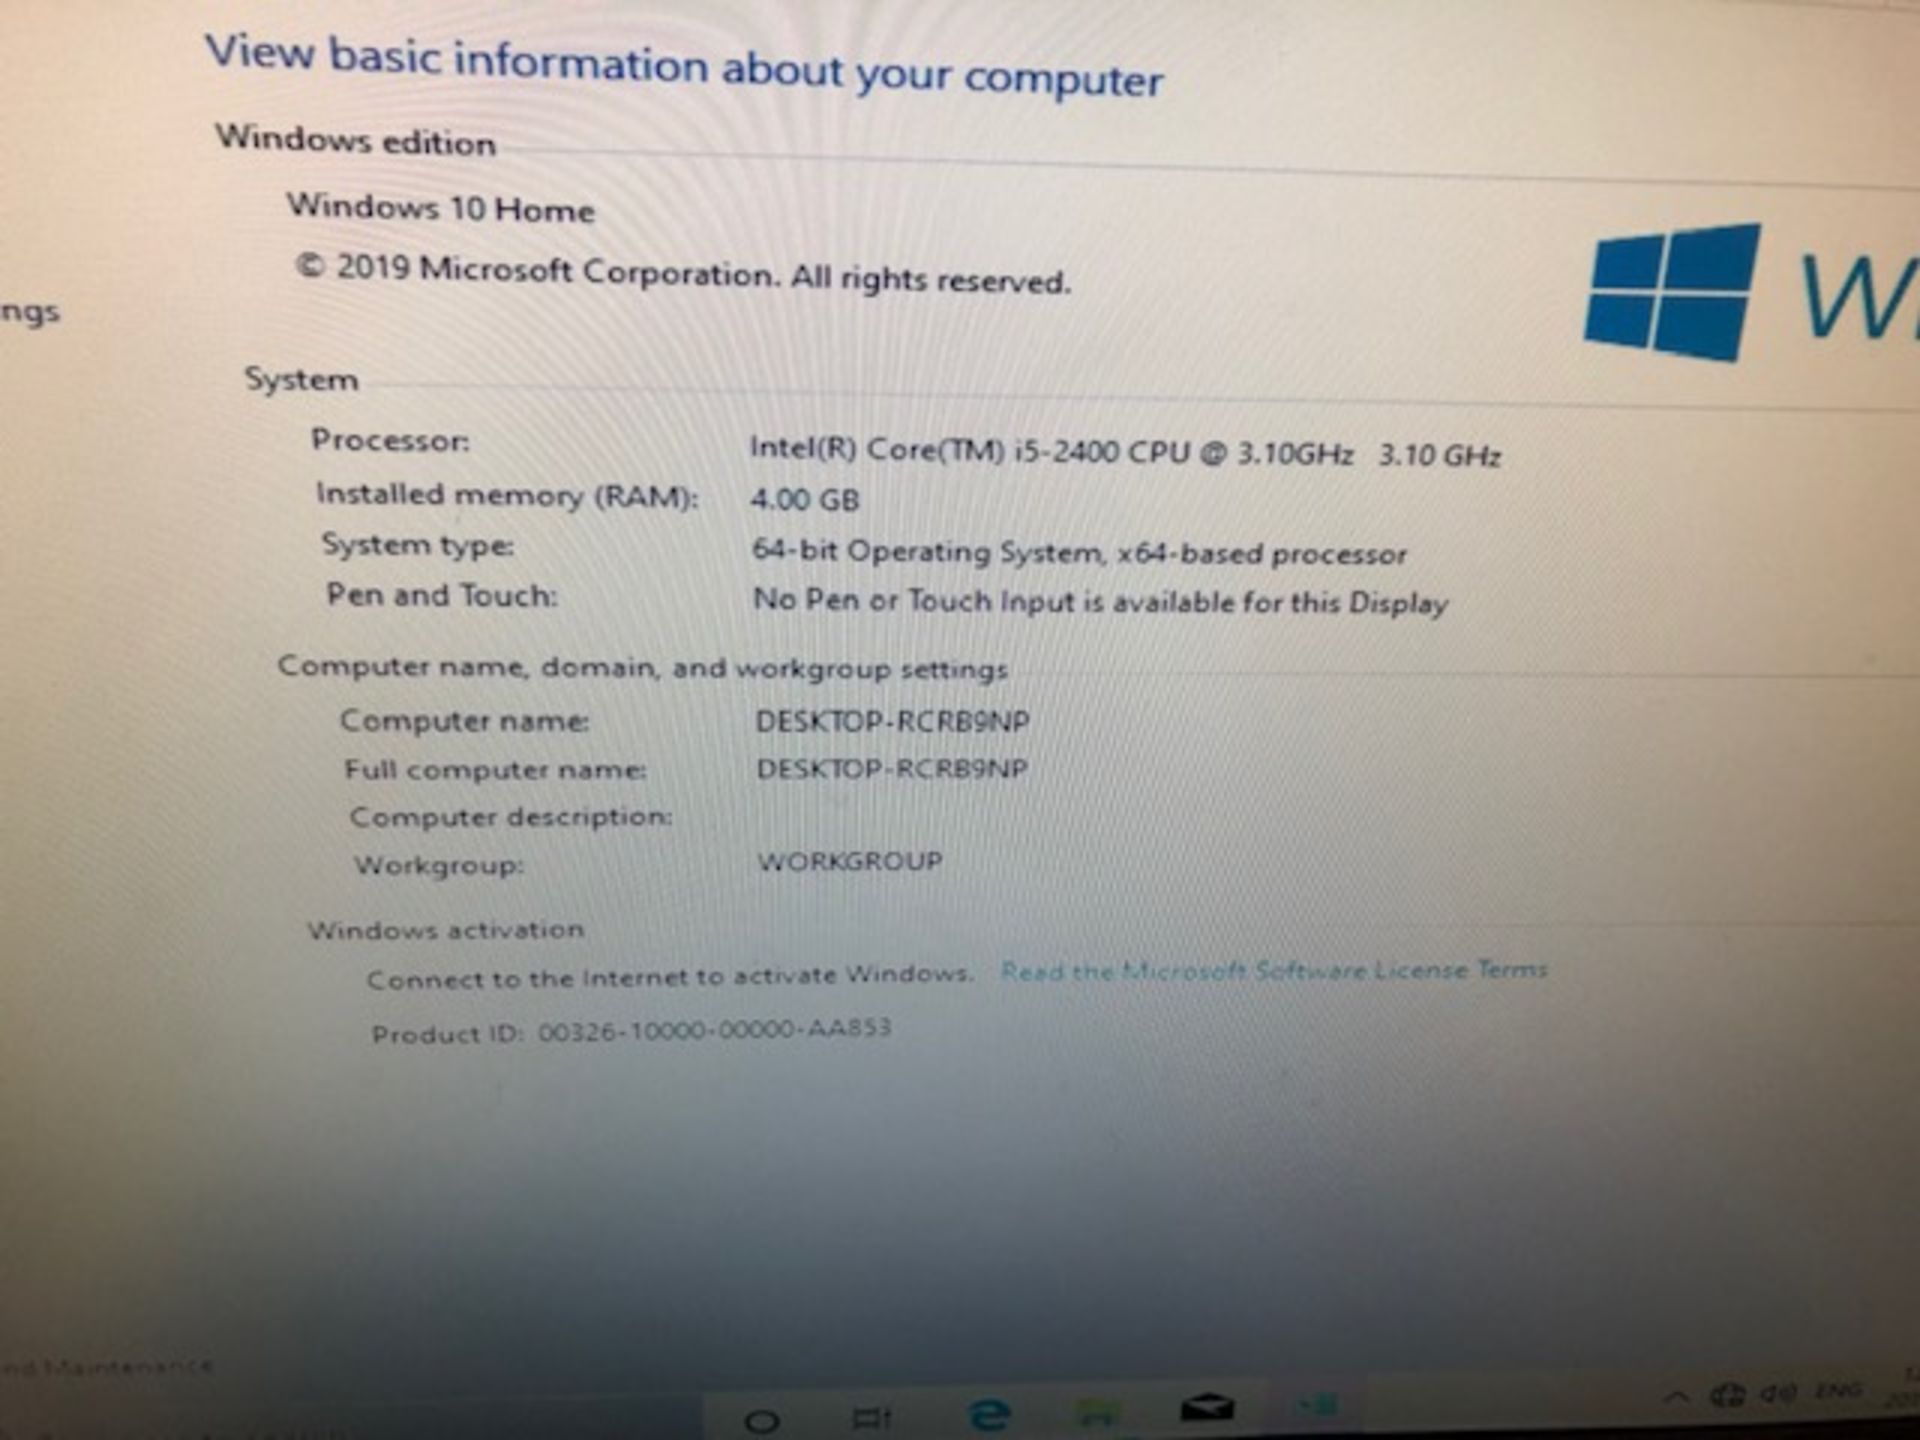 LG, COOLER MASTER, DESKTOP COMPUTER, INTEL I5-2400, CPU @ 3.10 GHZ, 4 GB RAM, WINDOWS 10 OPERATING - Image 5 of 7